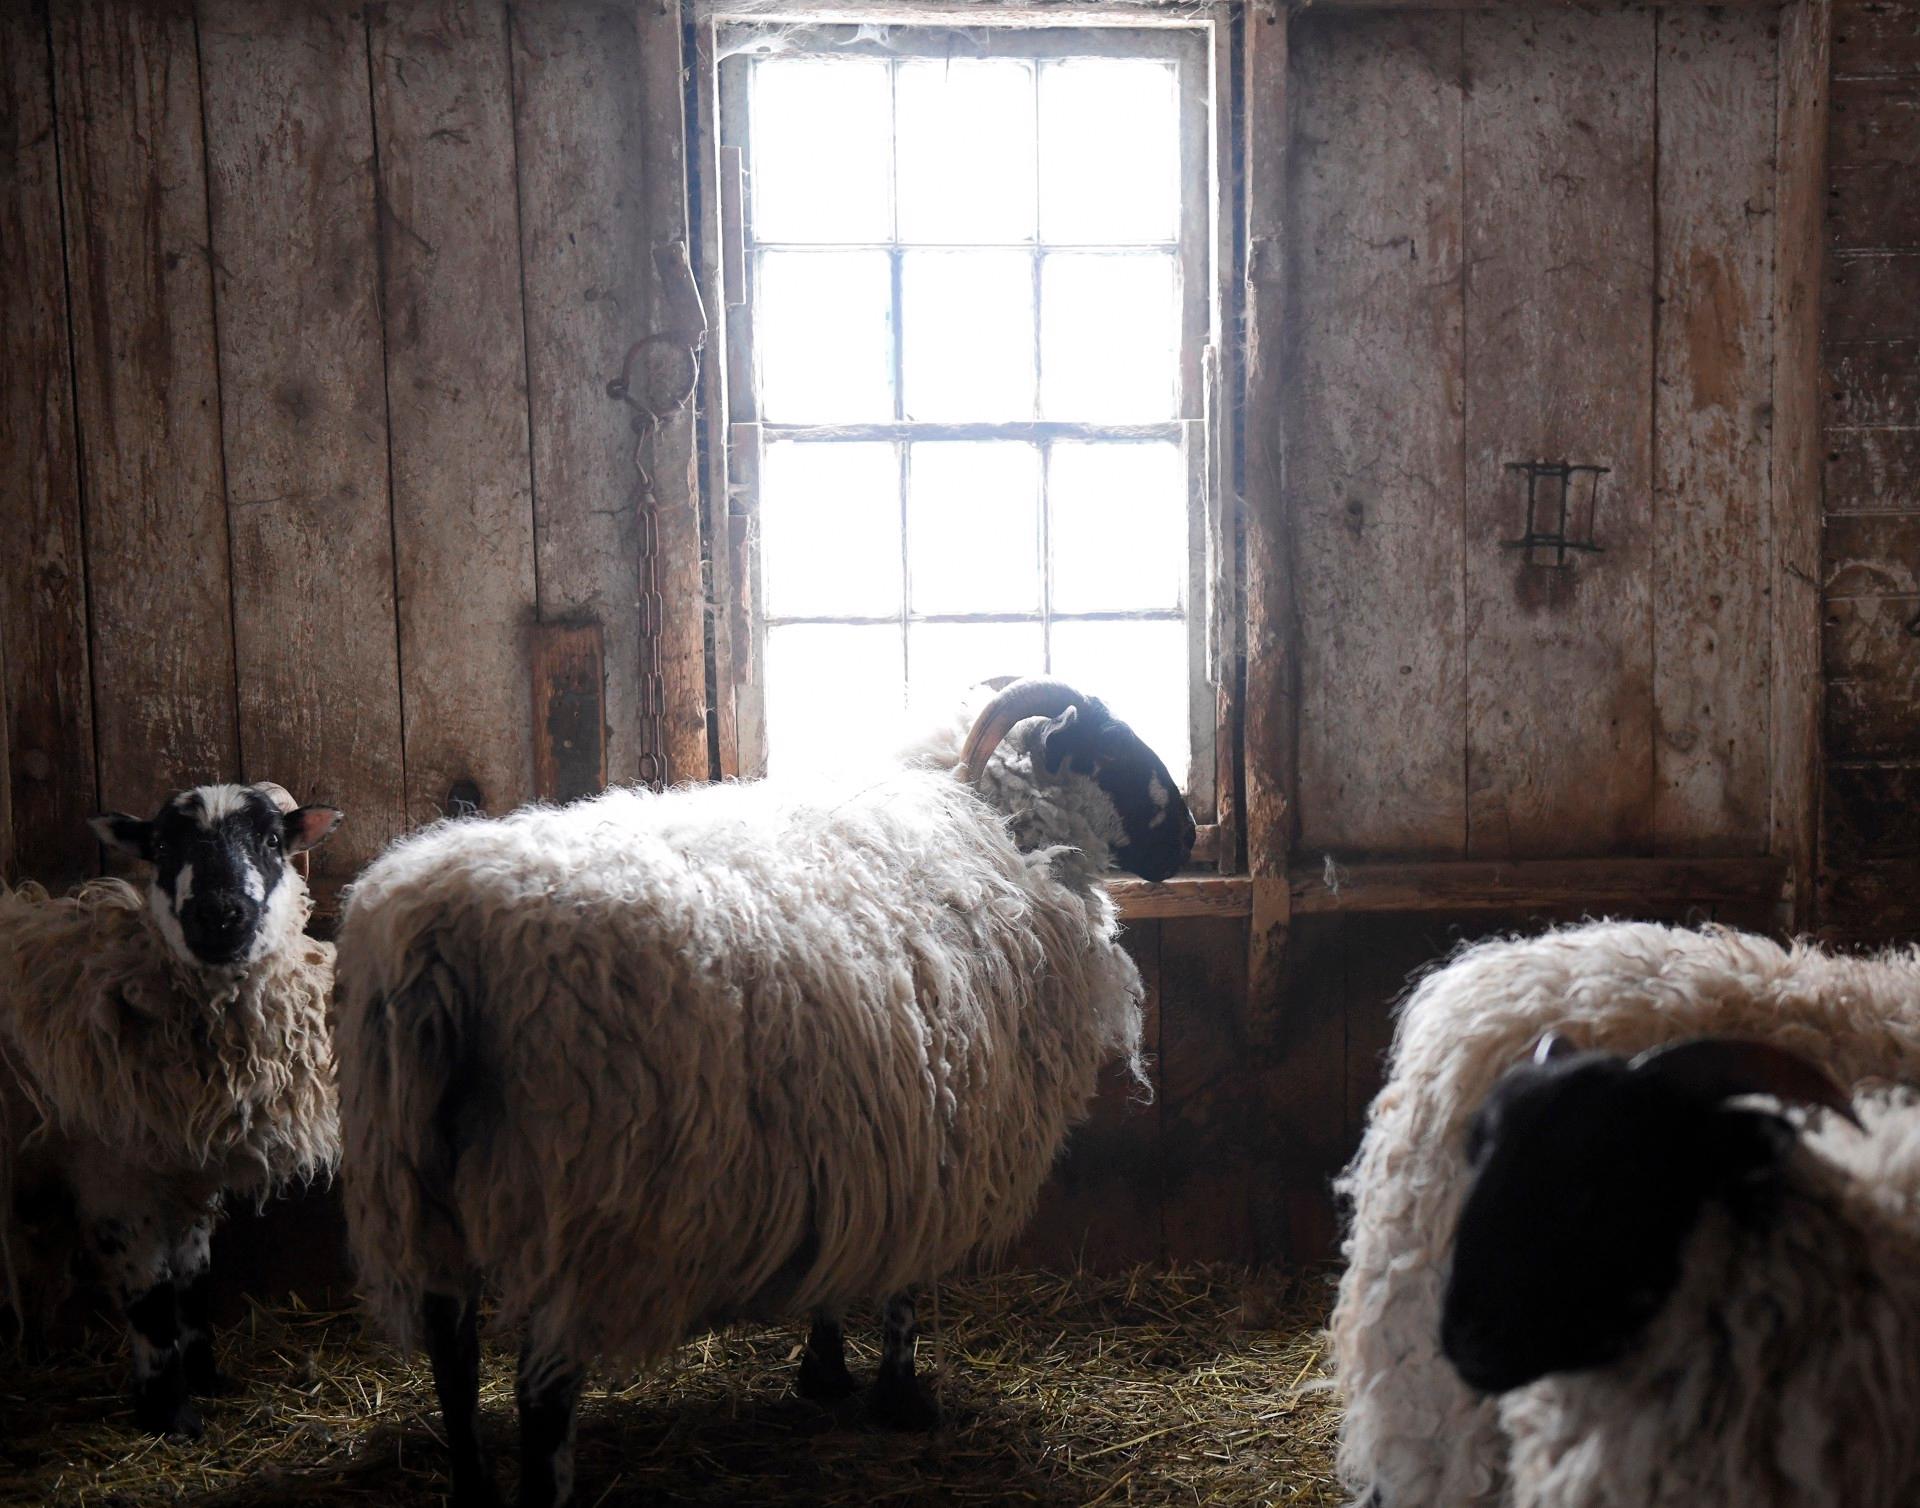 Sheep in Barn Window - Art by Nina Fuller